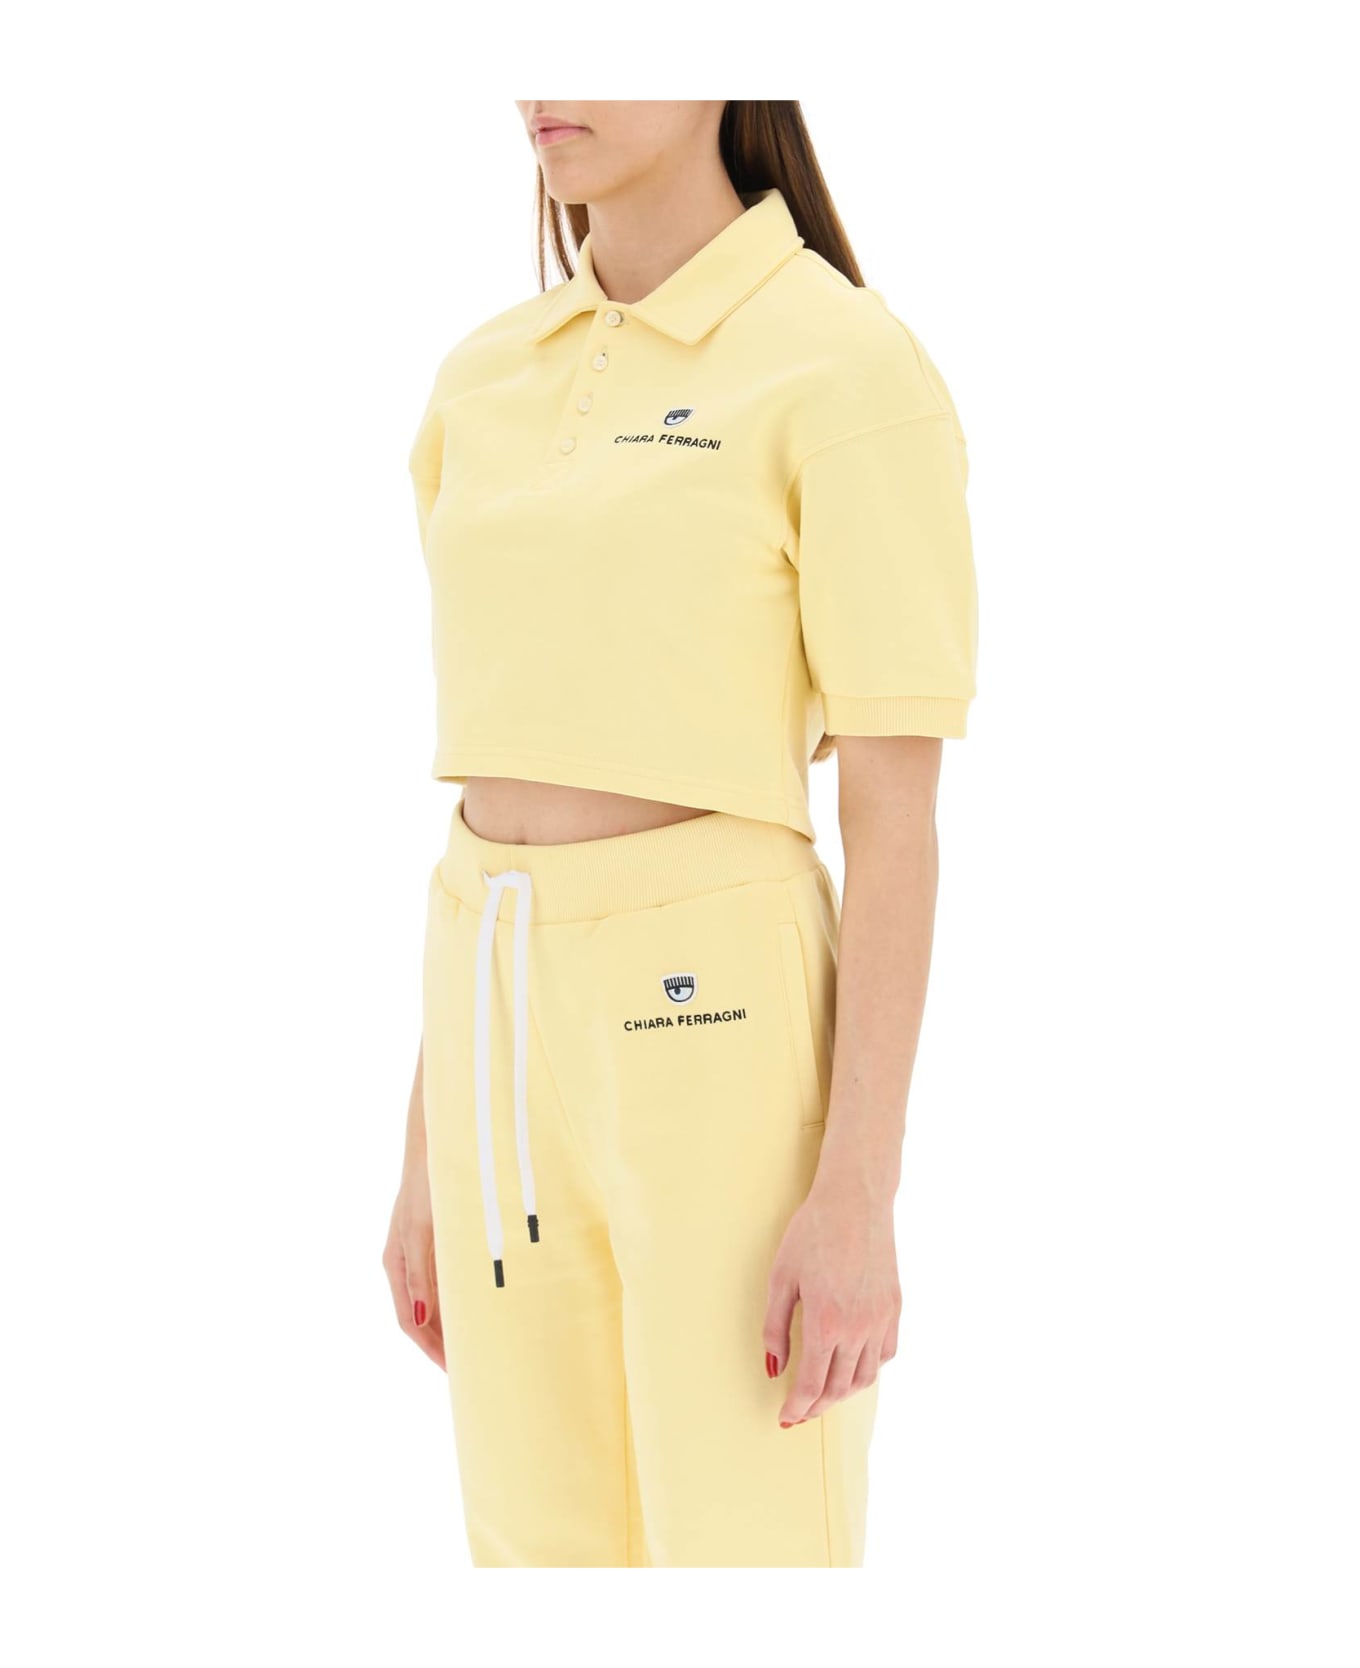 Chiara Ferragni Cropped Fleece Polo Shirt - Giallo ポロシャツ